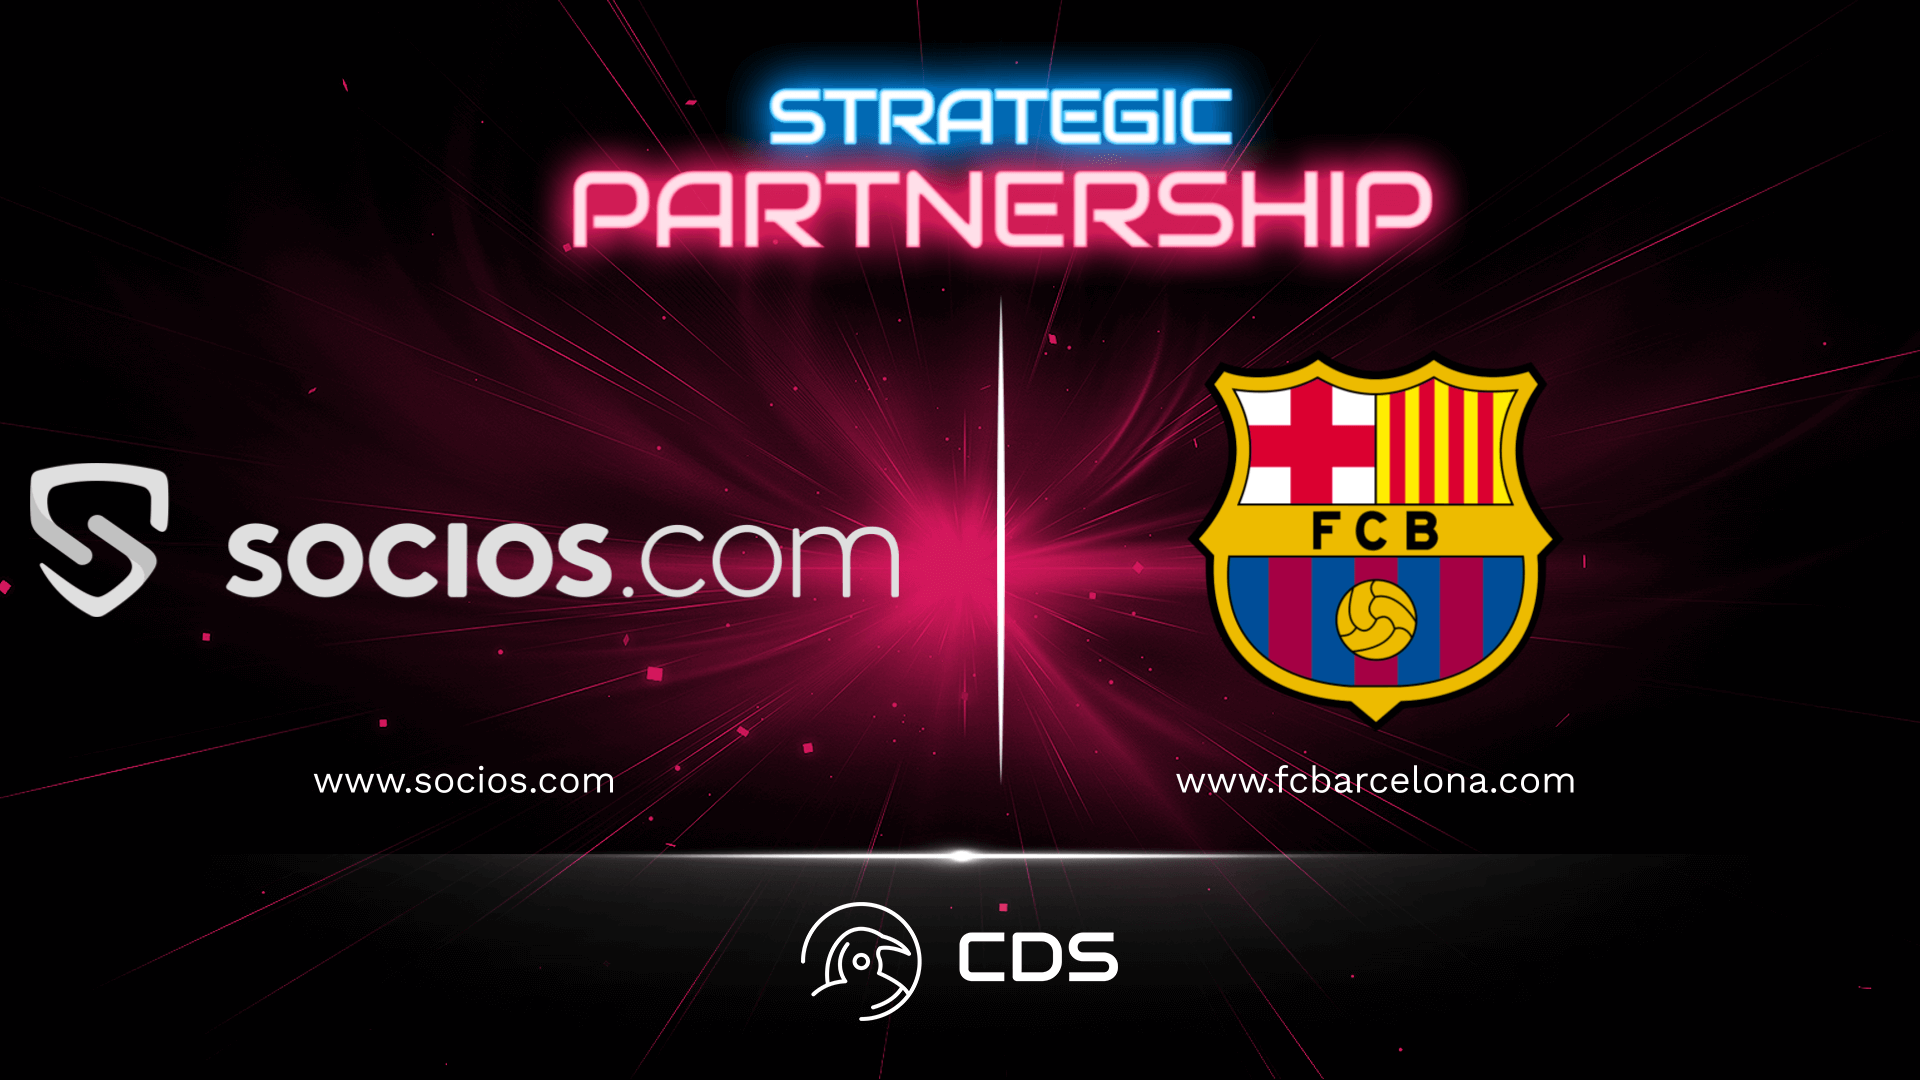 FC Barcelona partnership with socıos.com